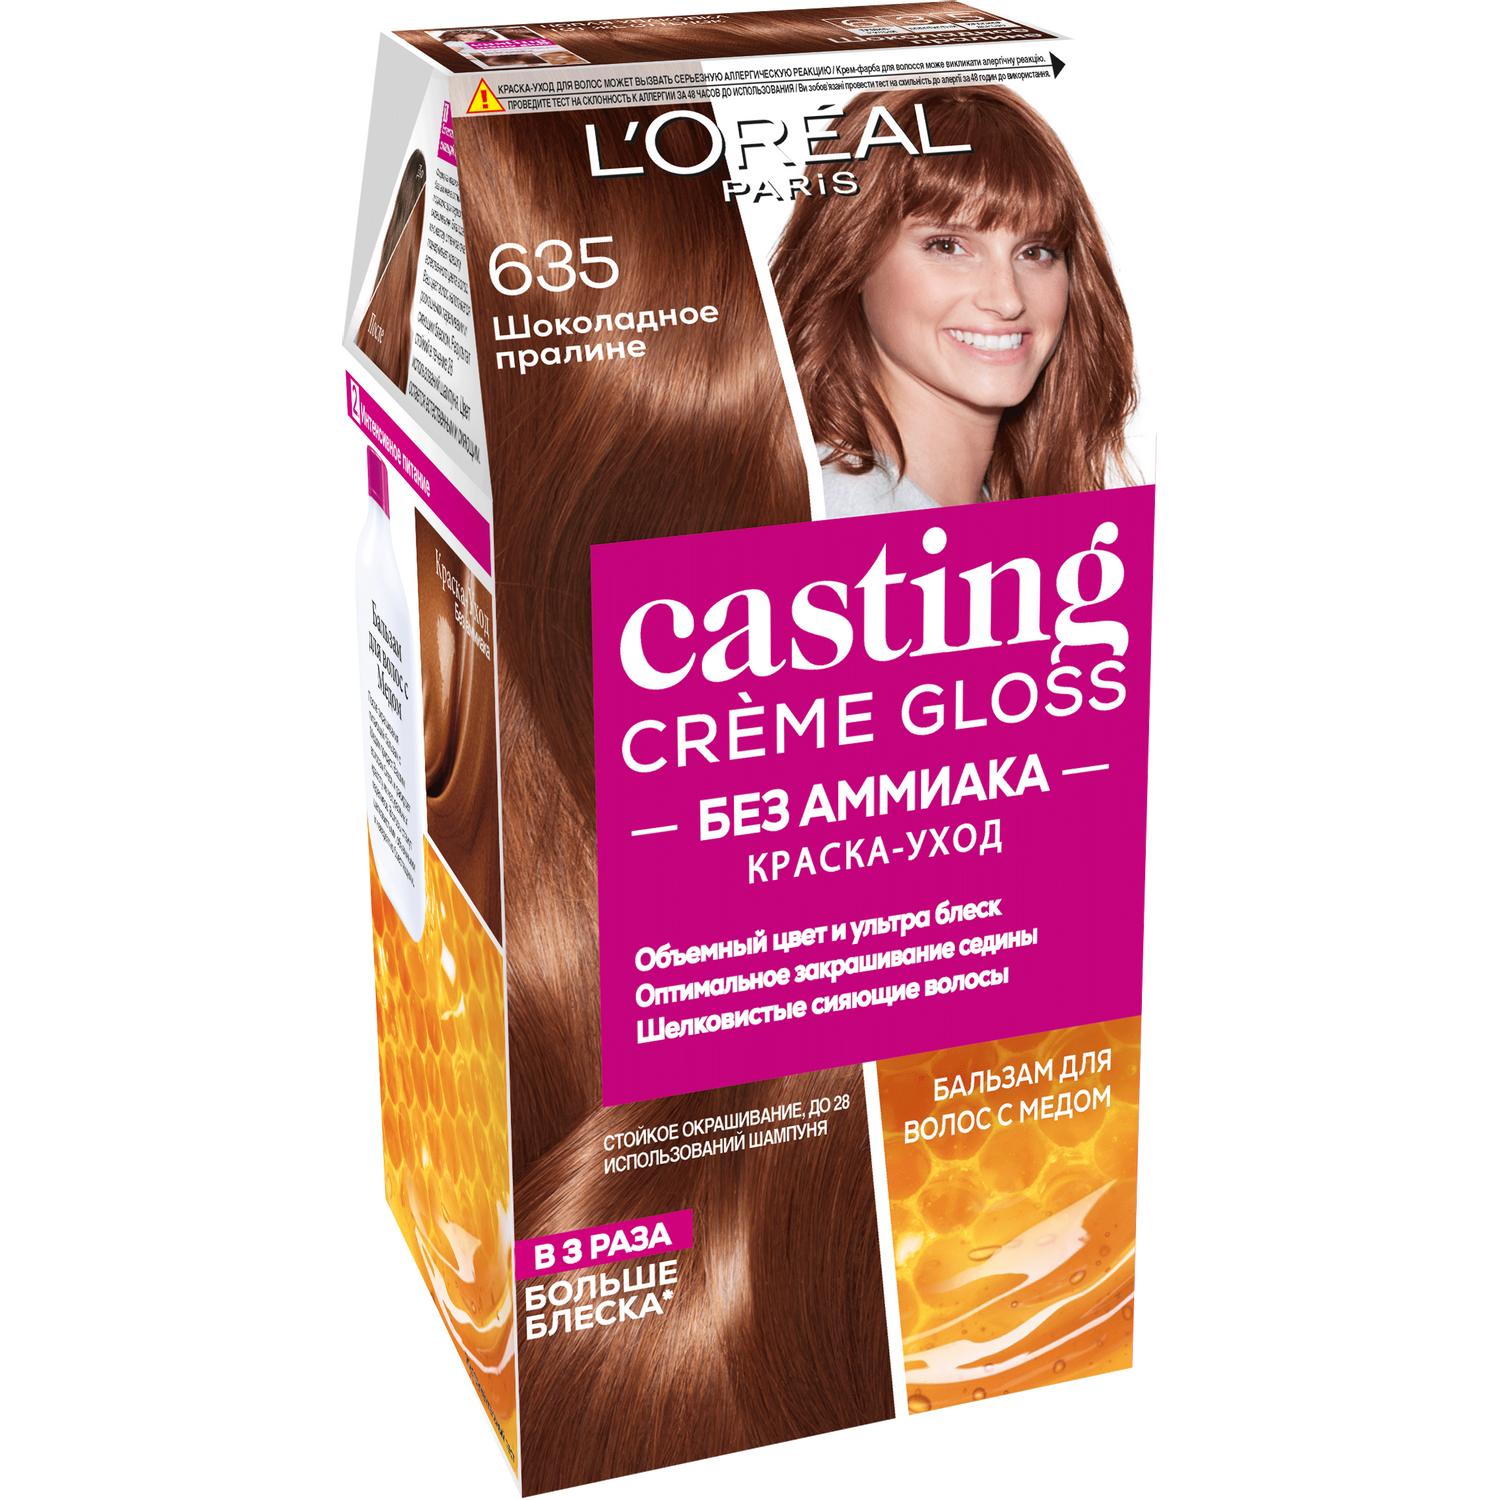 Краска для волос L'Oreal Paris Casting Creme Gloss 635 Шоколадное пралине краска l’oreal casting creme gloss 535 254 мл шоколад a3285100